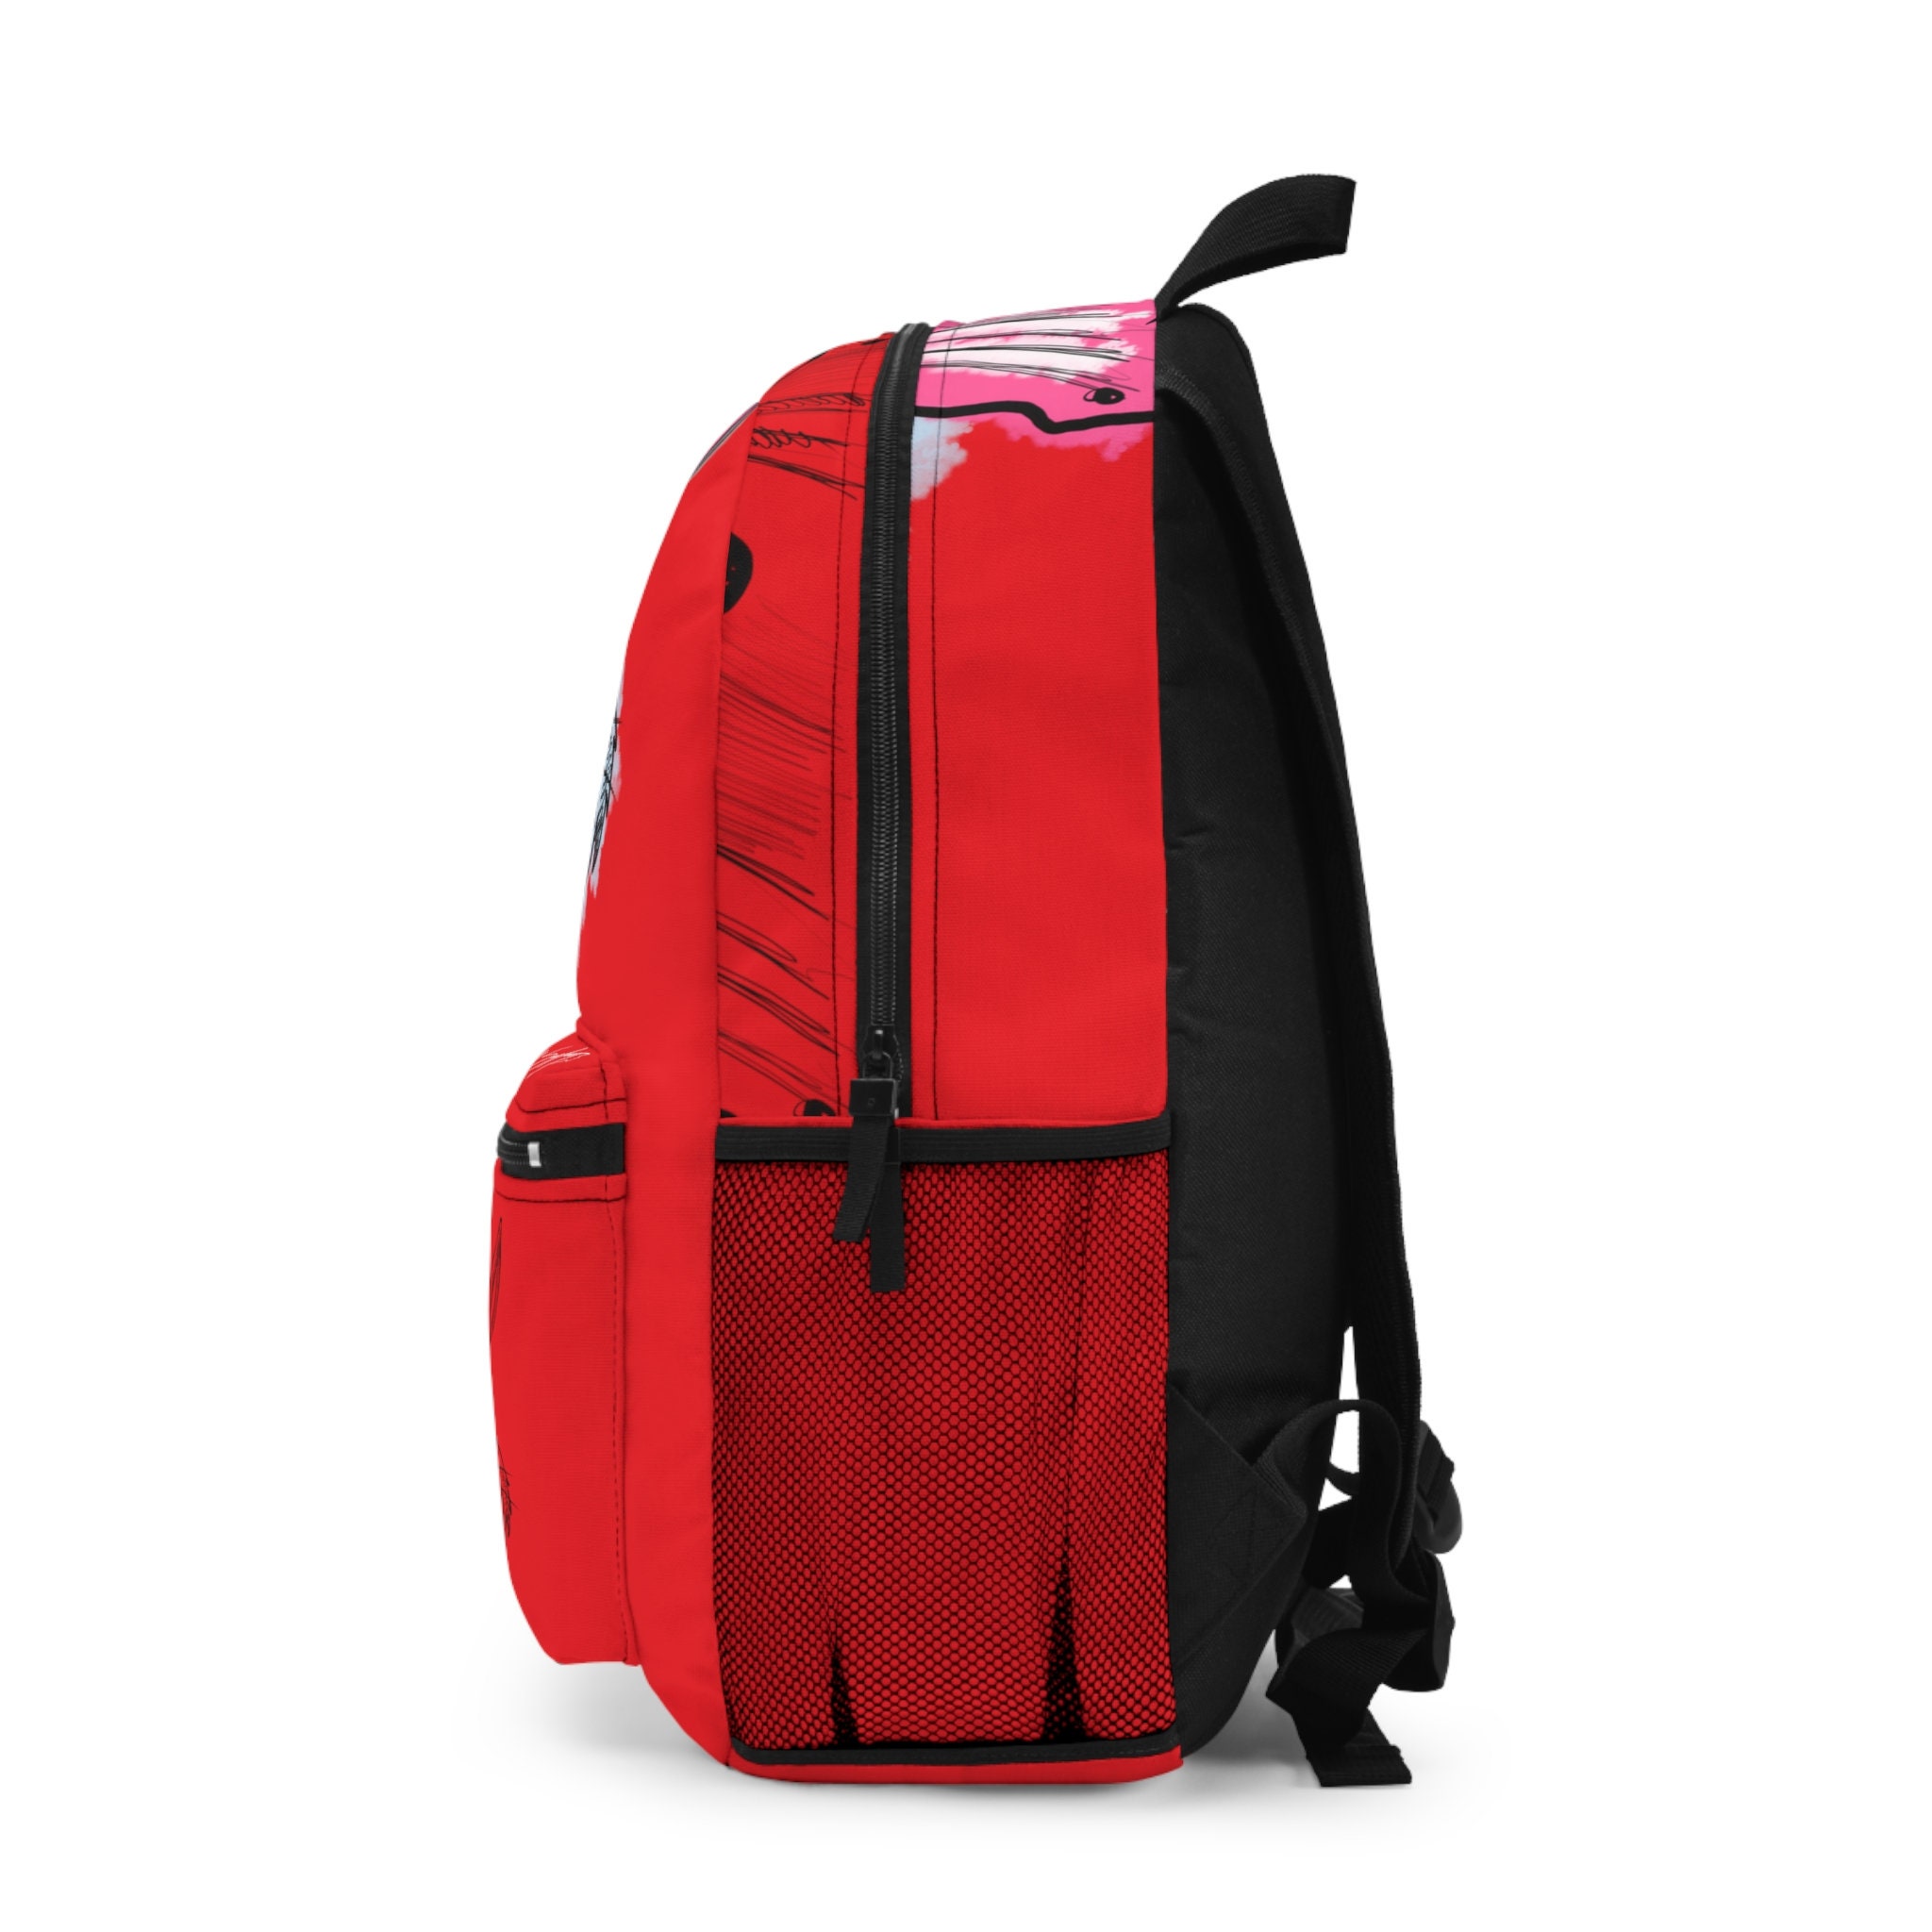 Cool Bugs Bunny Red Gift Backpack, Basketball Gray Bag